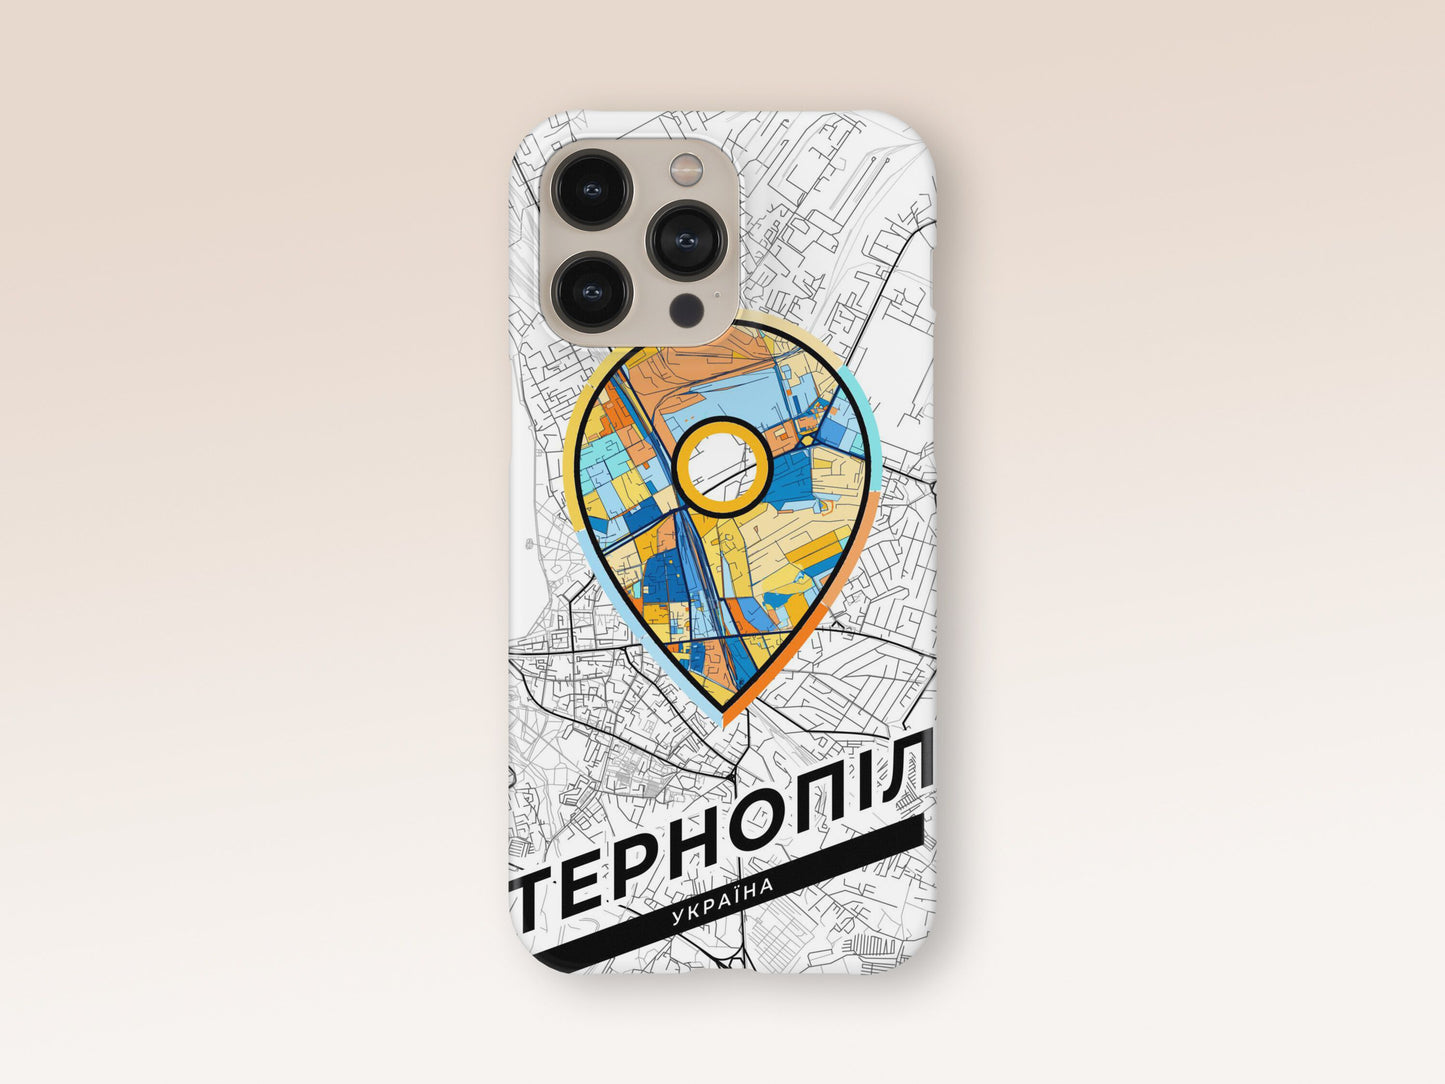 Ternopil Ukraine slim phone case with colorful icon 1